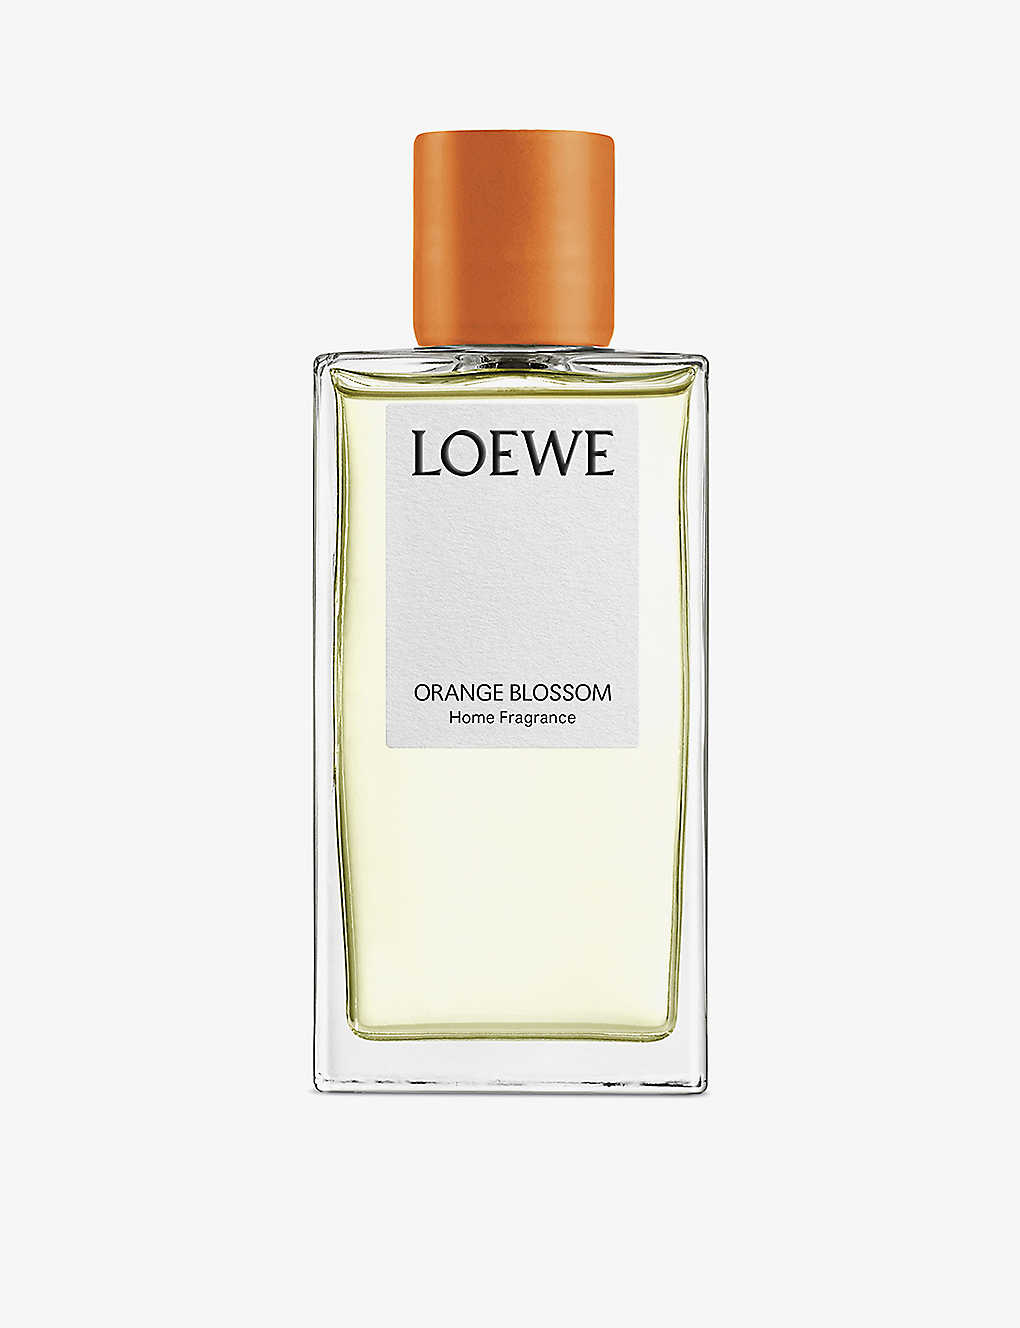 Loewe Orange Blossom Home Fragrance